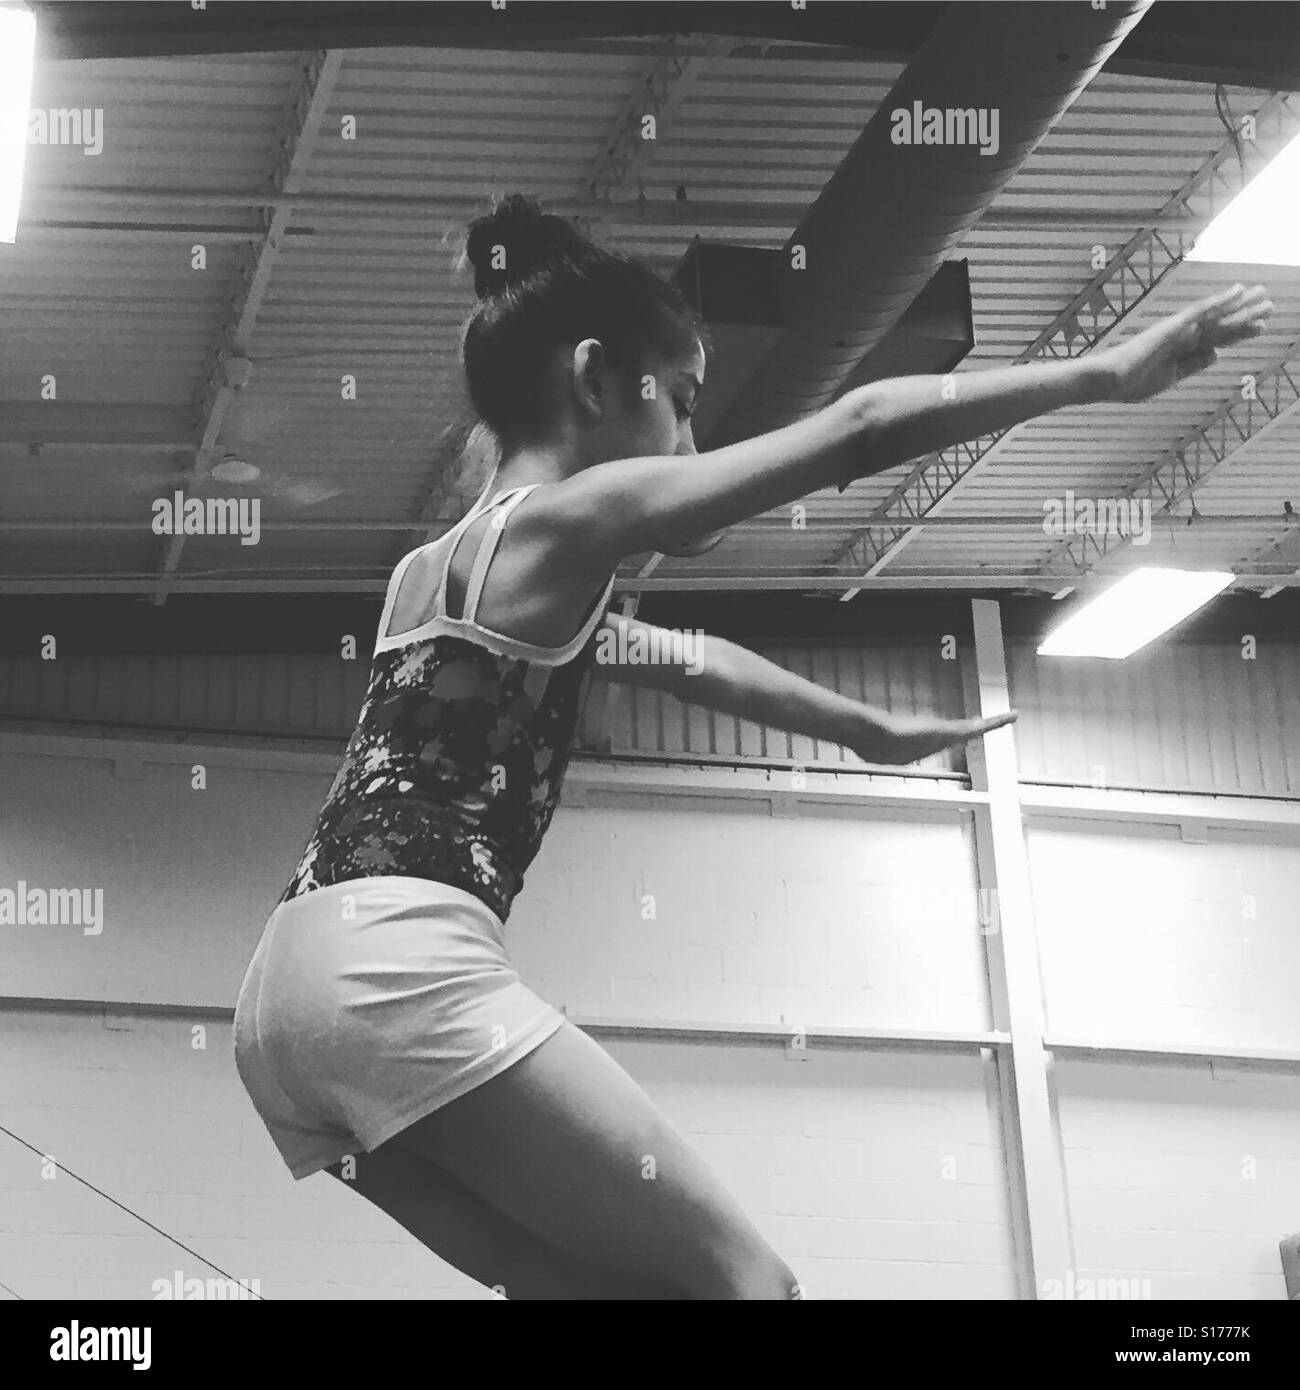 Gymnastics beam routine by K.R. Stock Photo